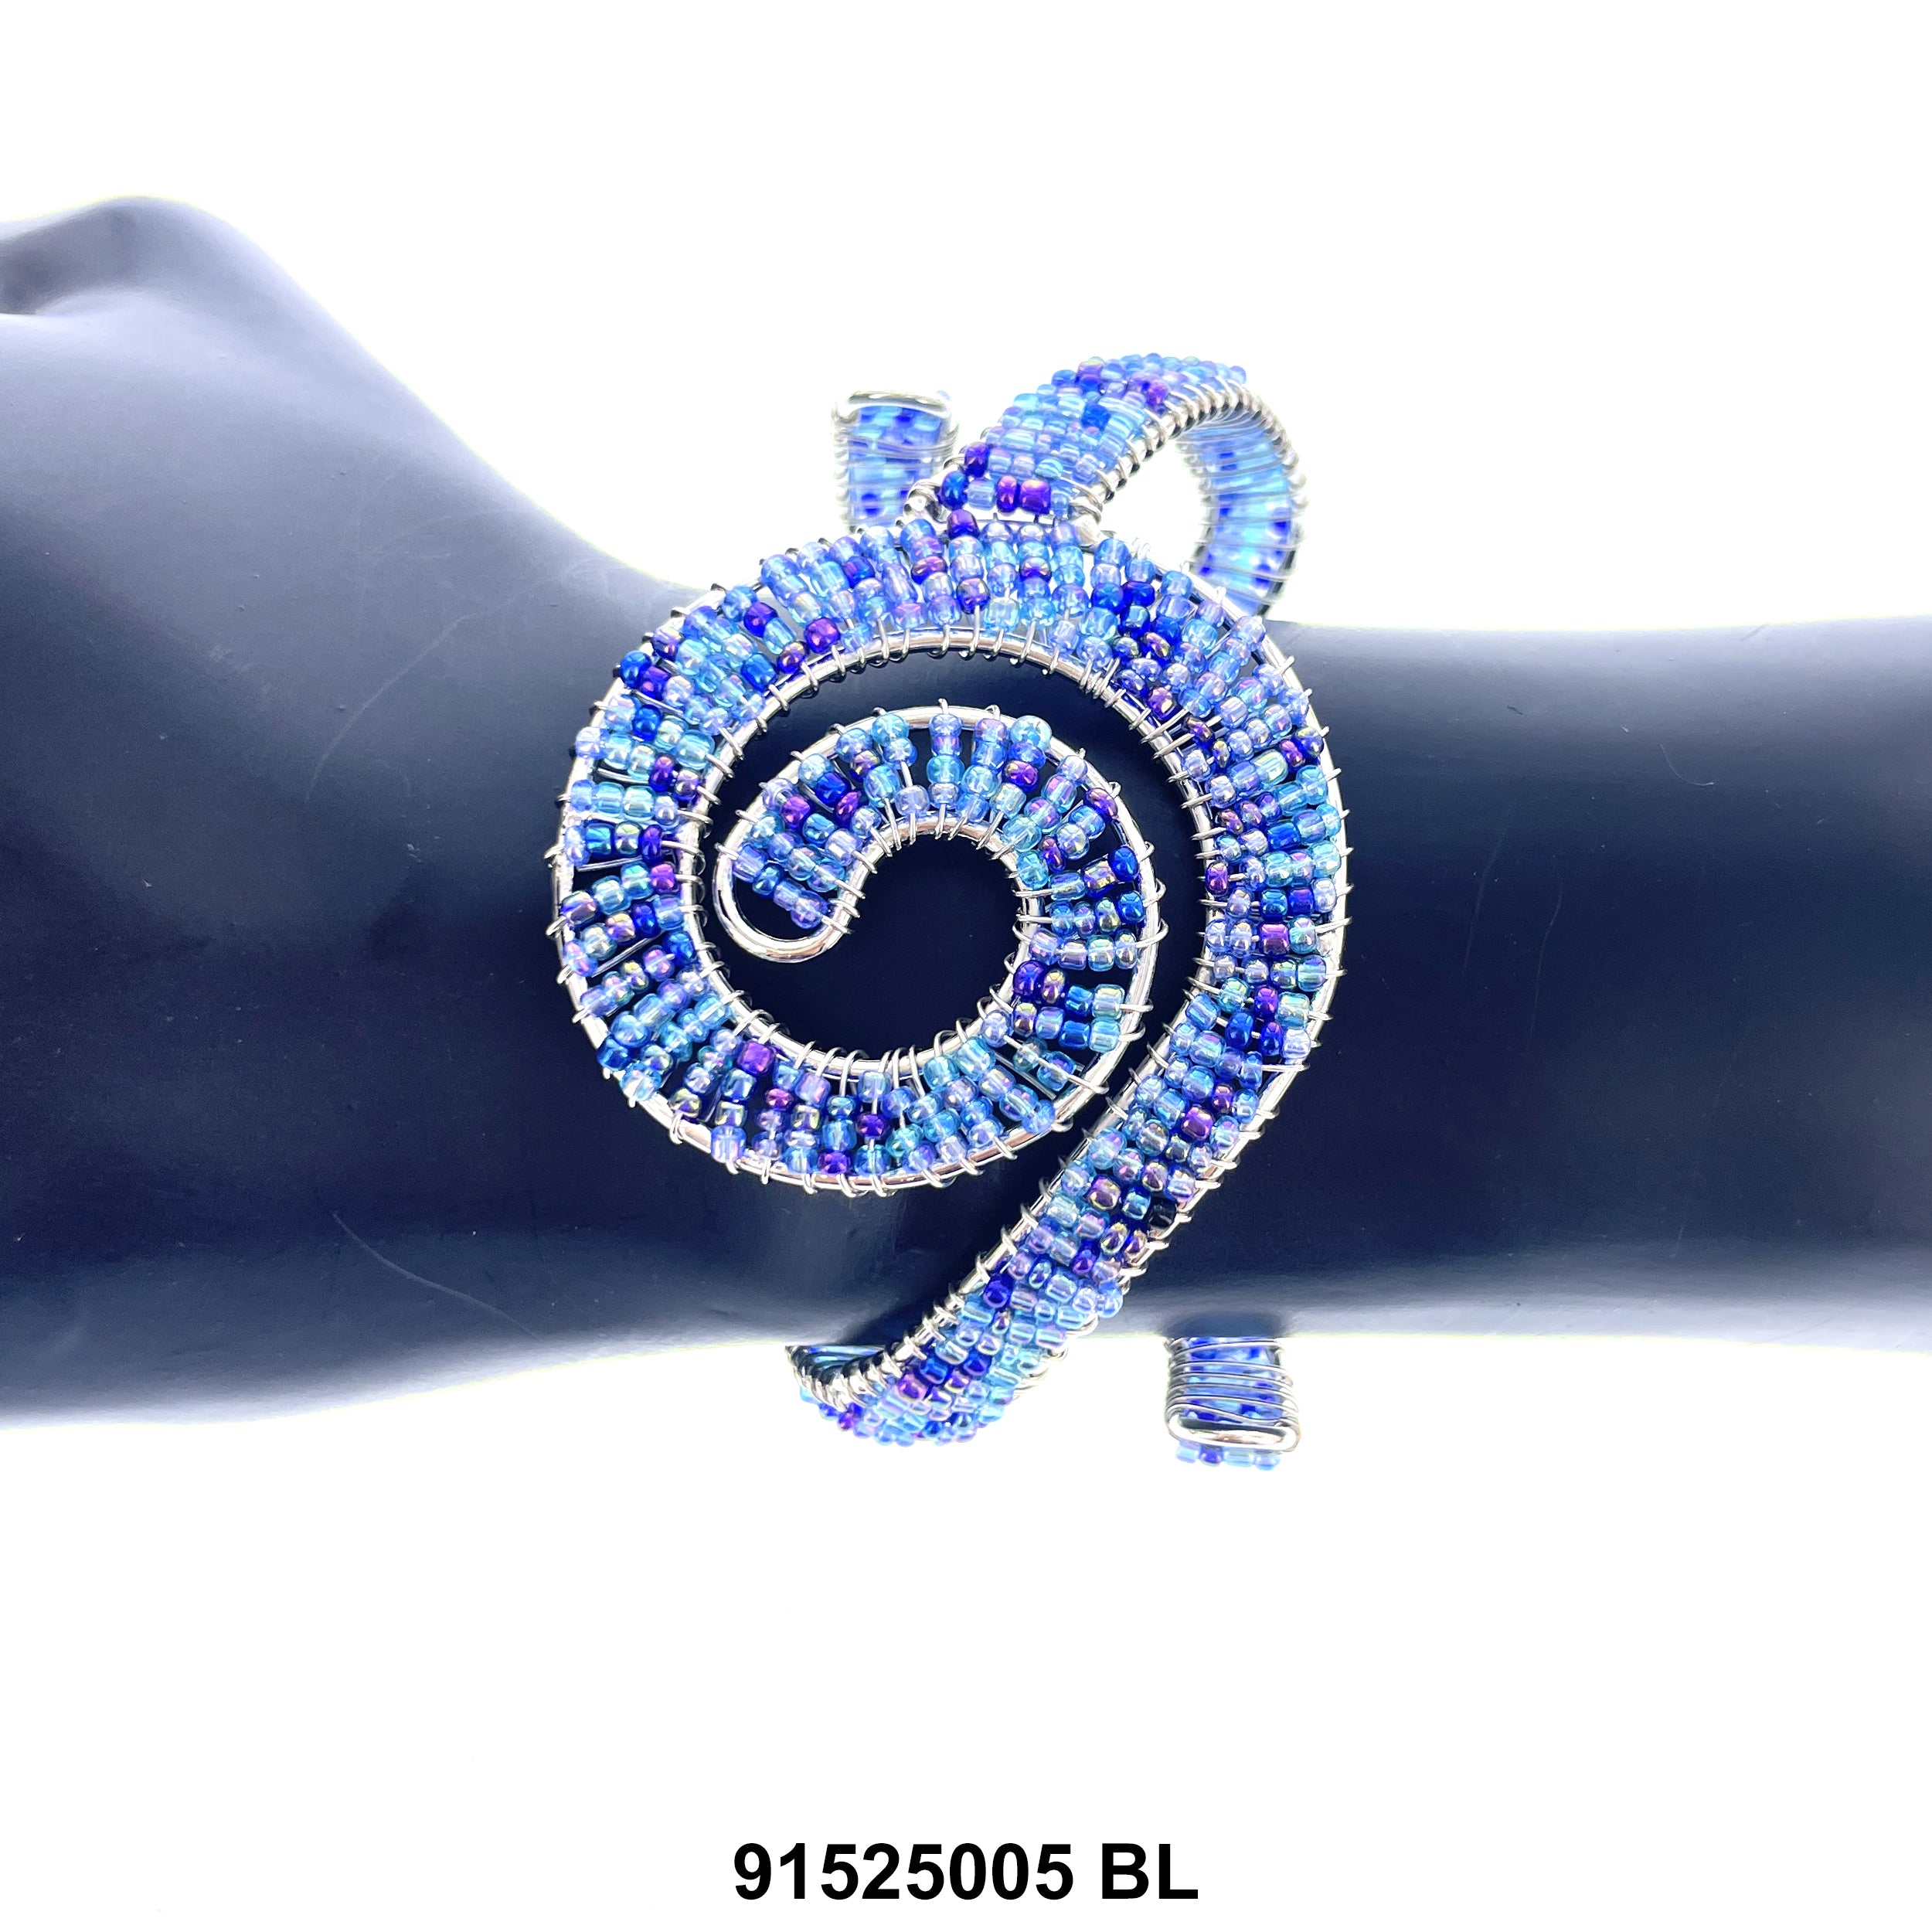 Cuff Bangle Bracelet 91525005 BL